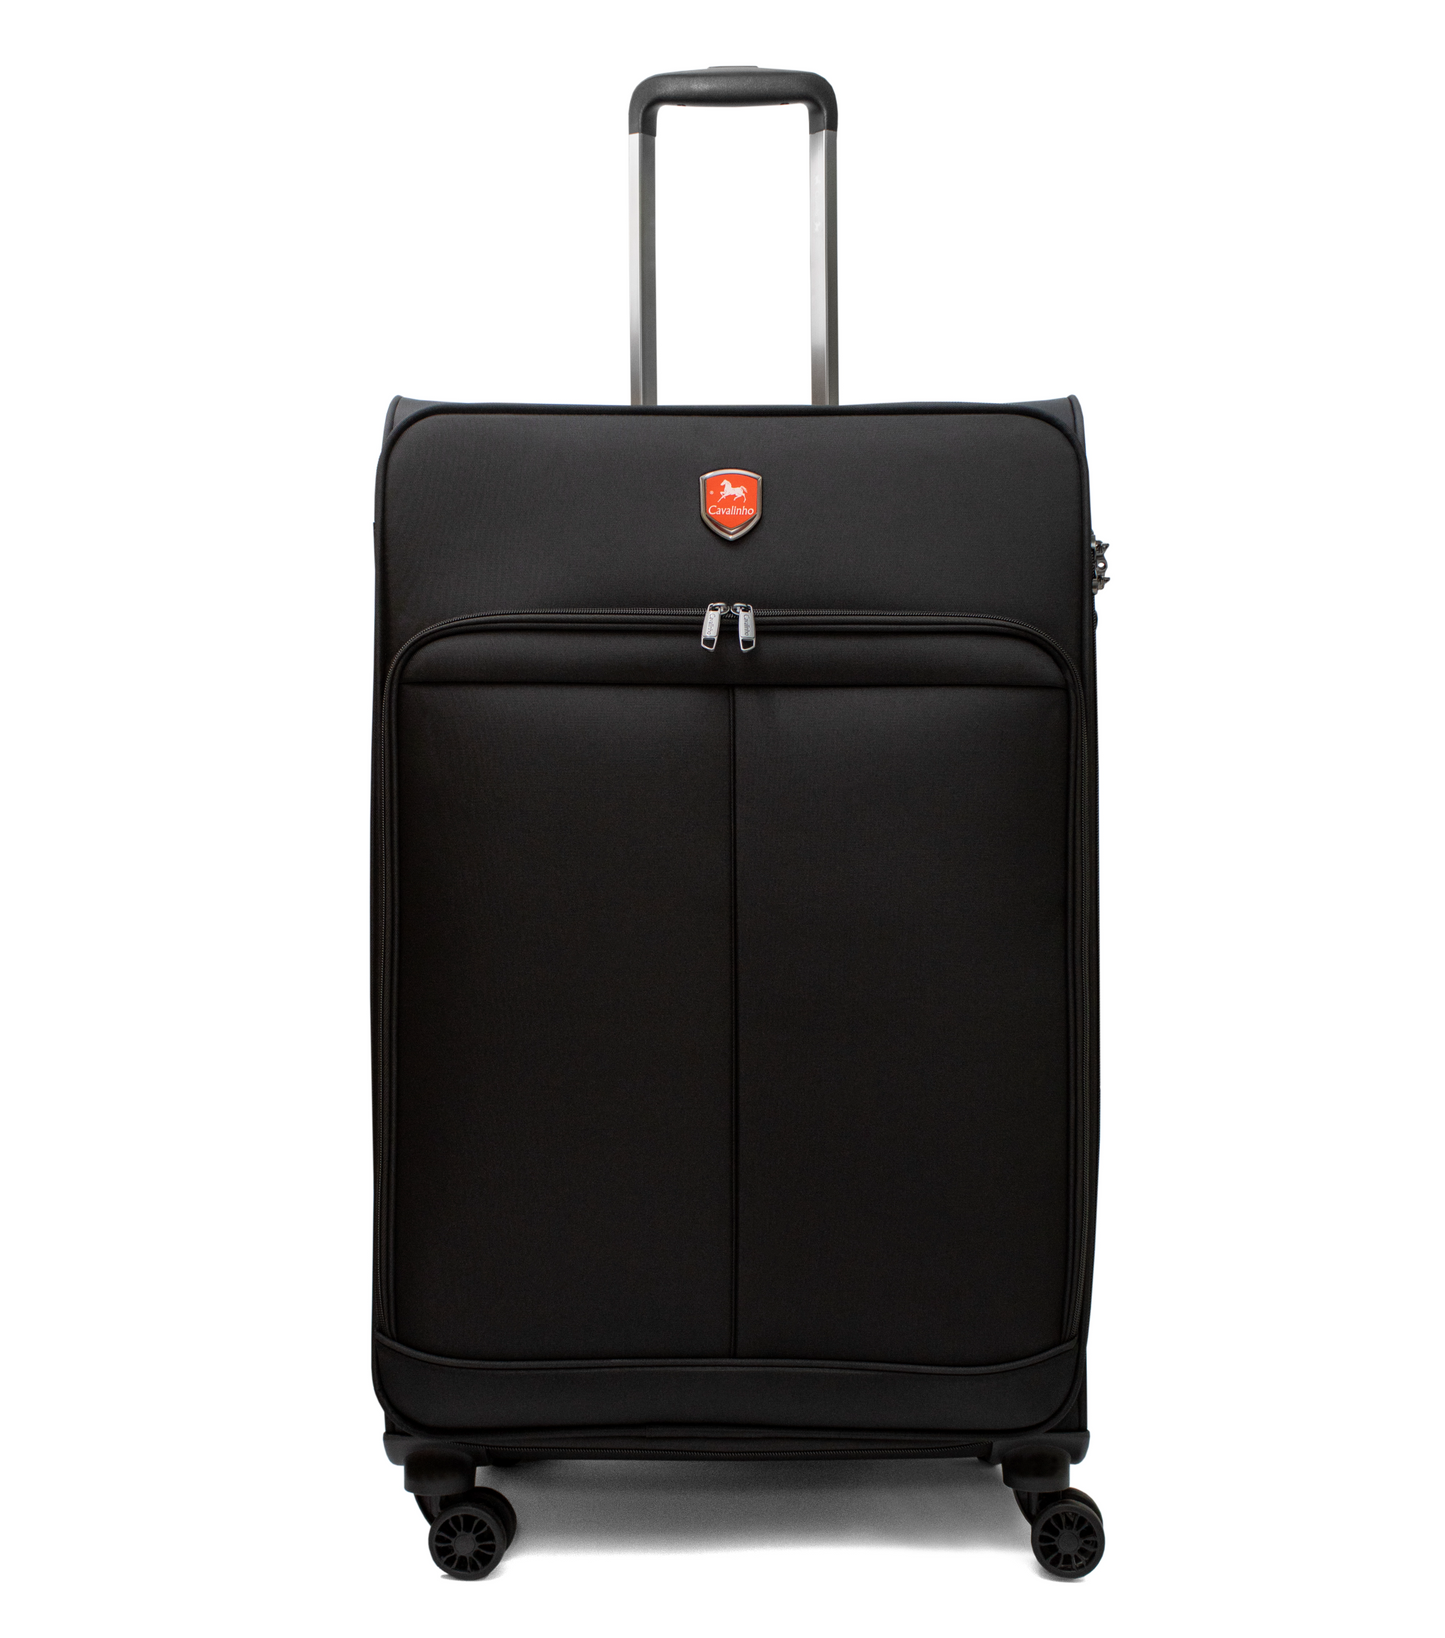 Cavalinho Check-in Softside Luggage (24" or 28") - 28 inch Black - 68020003.01.28_1